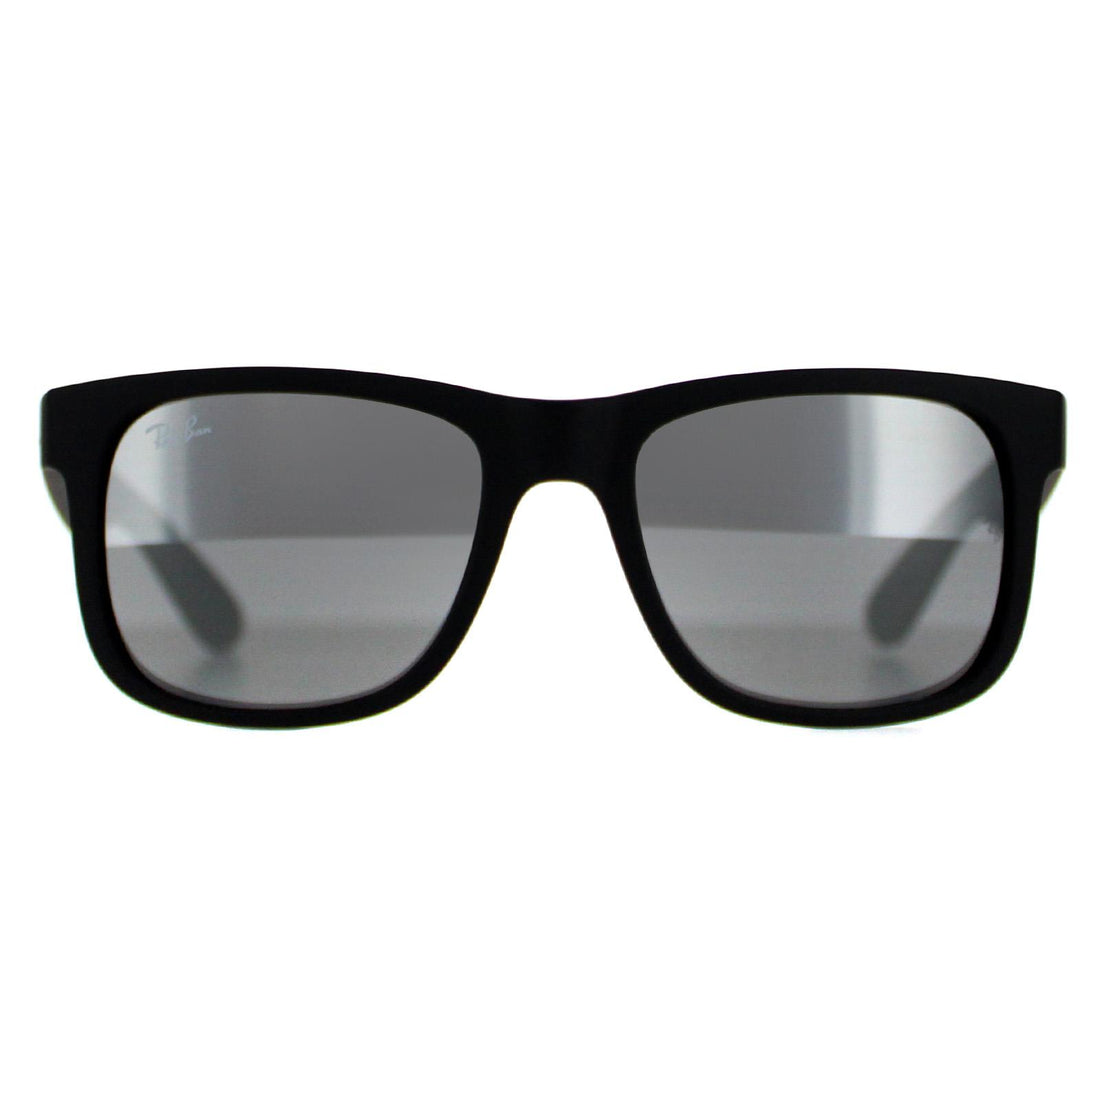 Ray-Ban Justin Classic RB4165 Sunglasses Rubber Black Grey Mirror